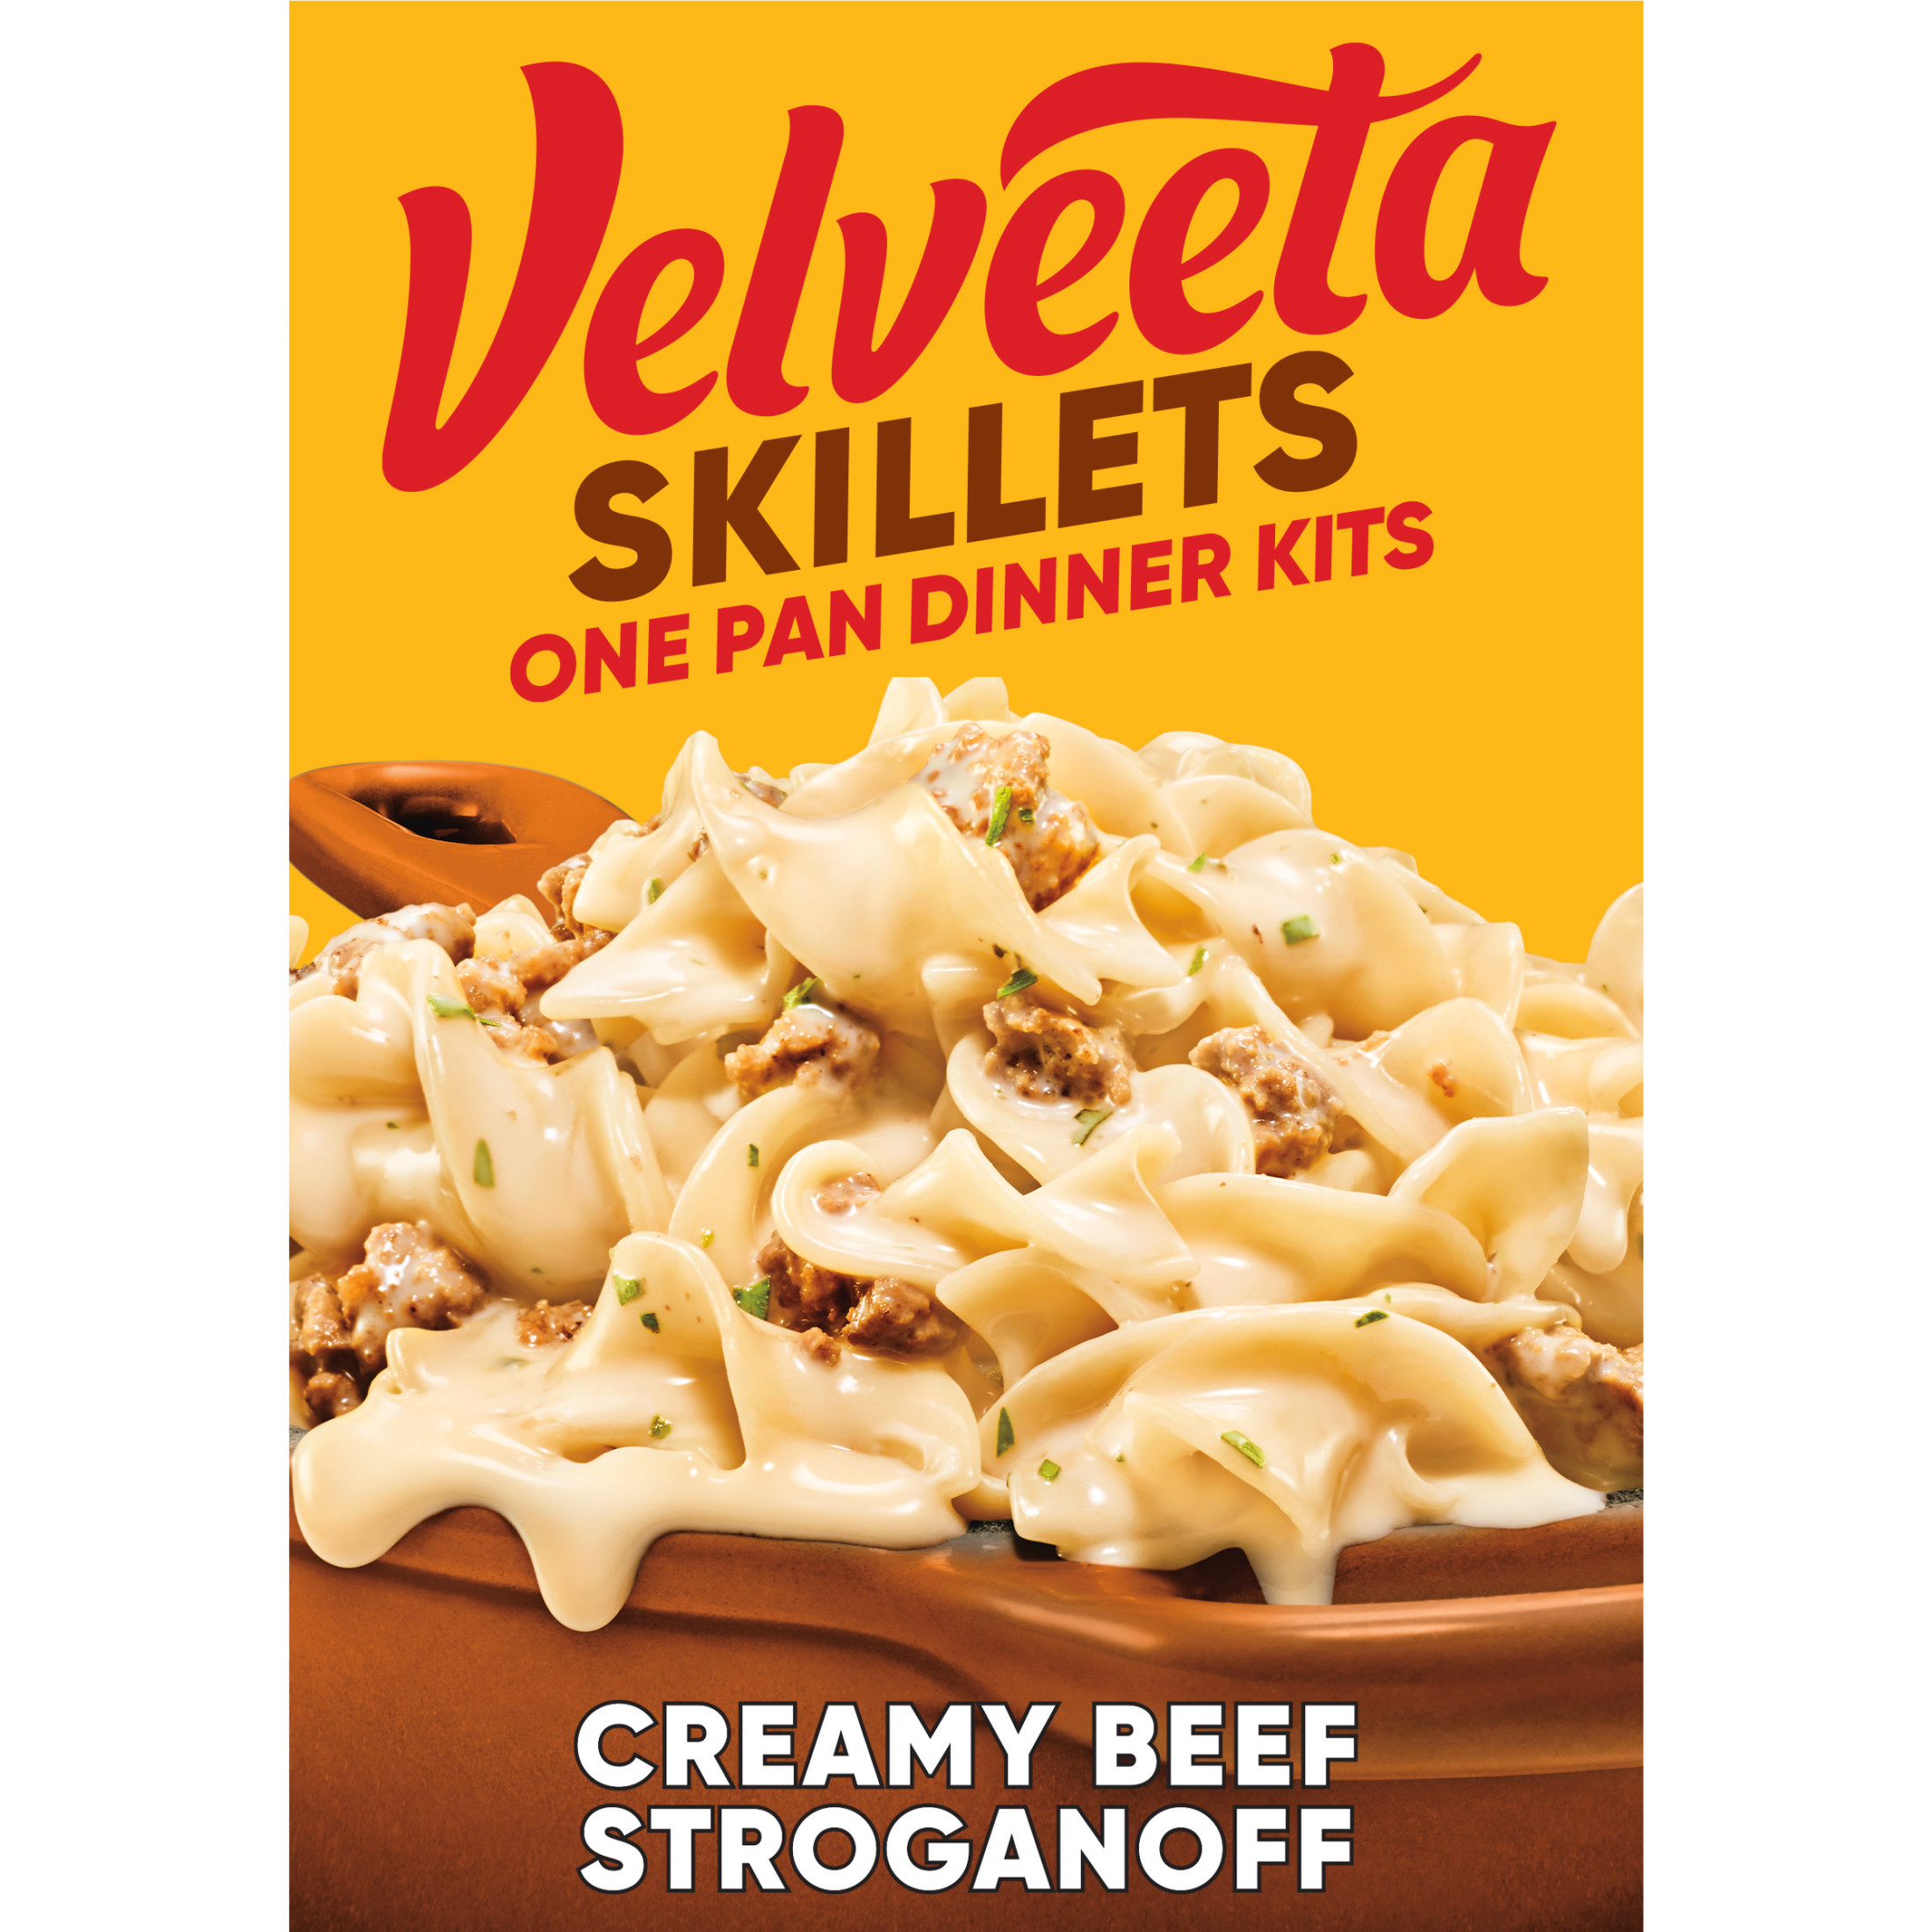 Velveeta Skillets Creamy Beef Stroganoff Pasta Dinner Kit, 11.6 oz Box - image 1 of 13